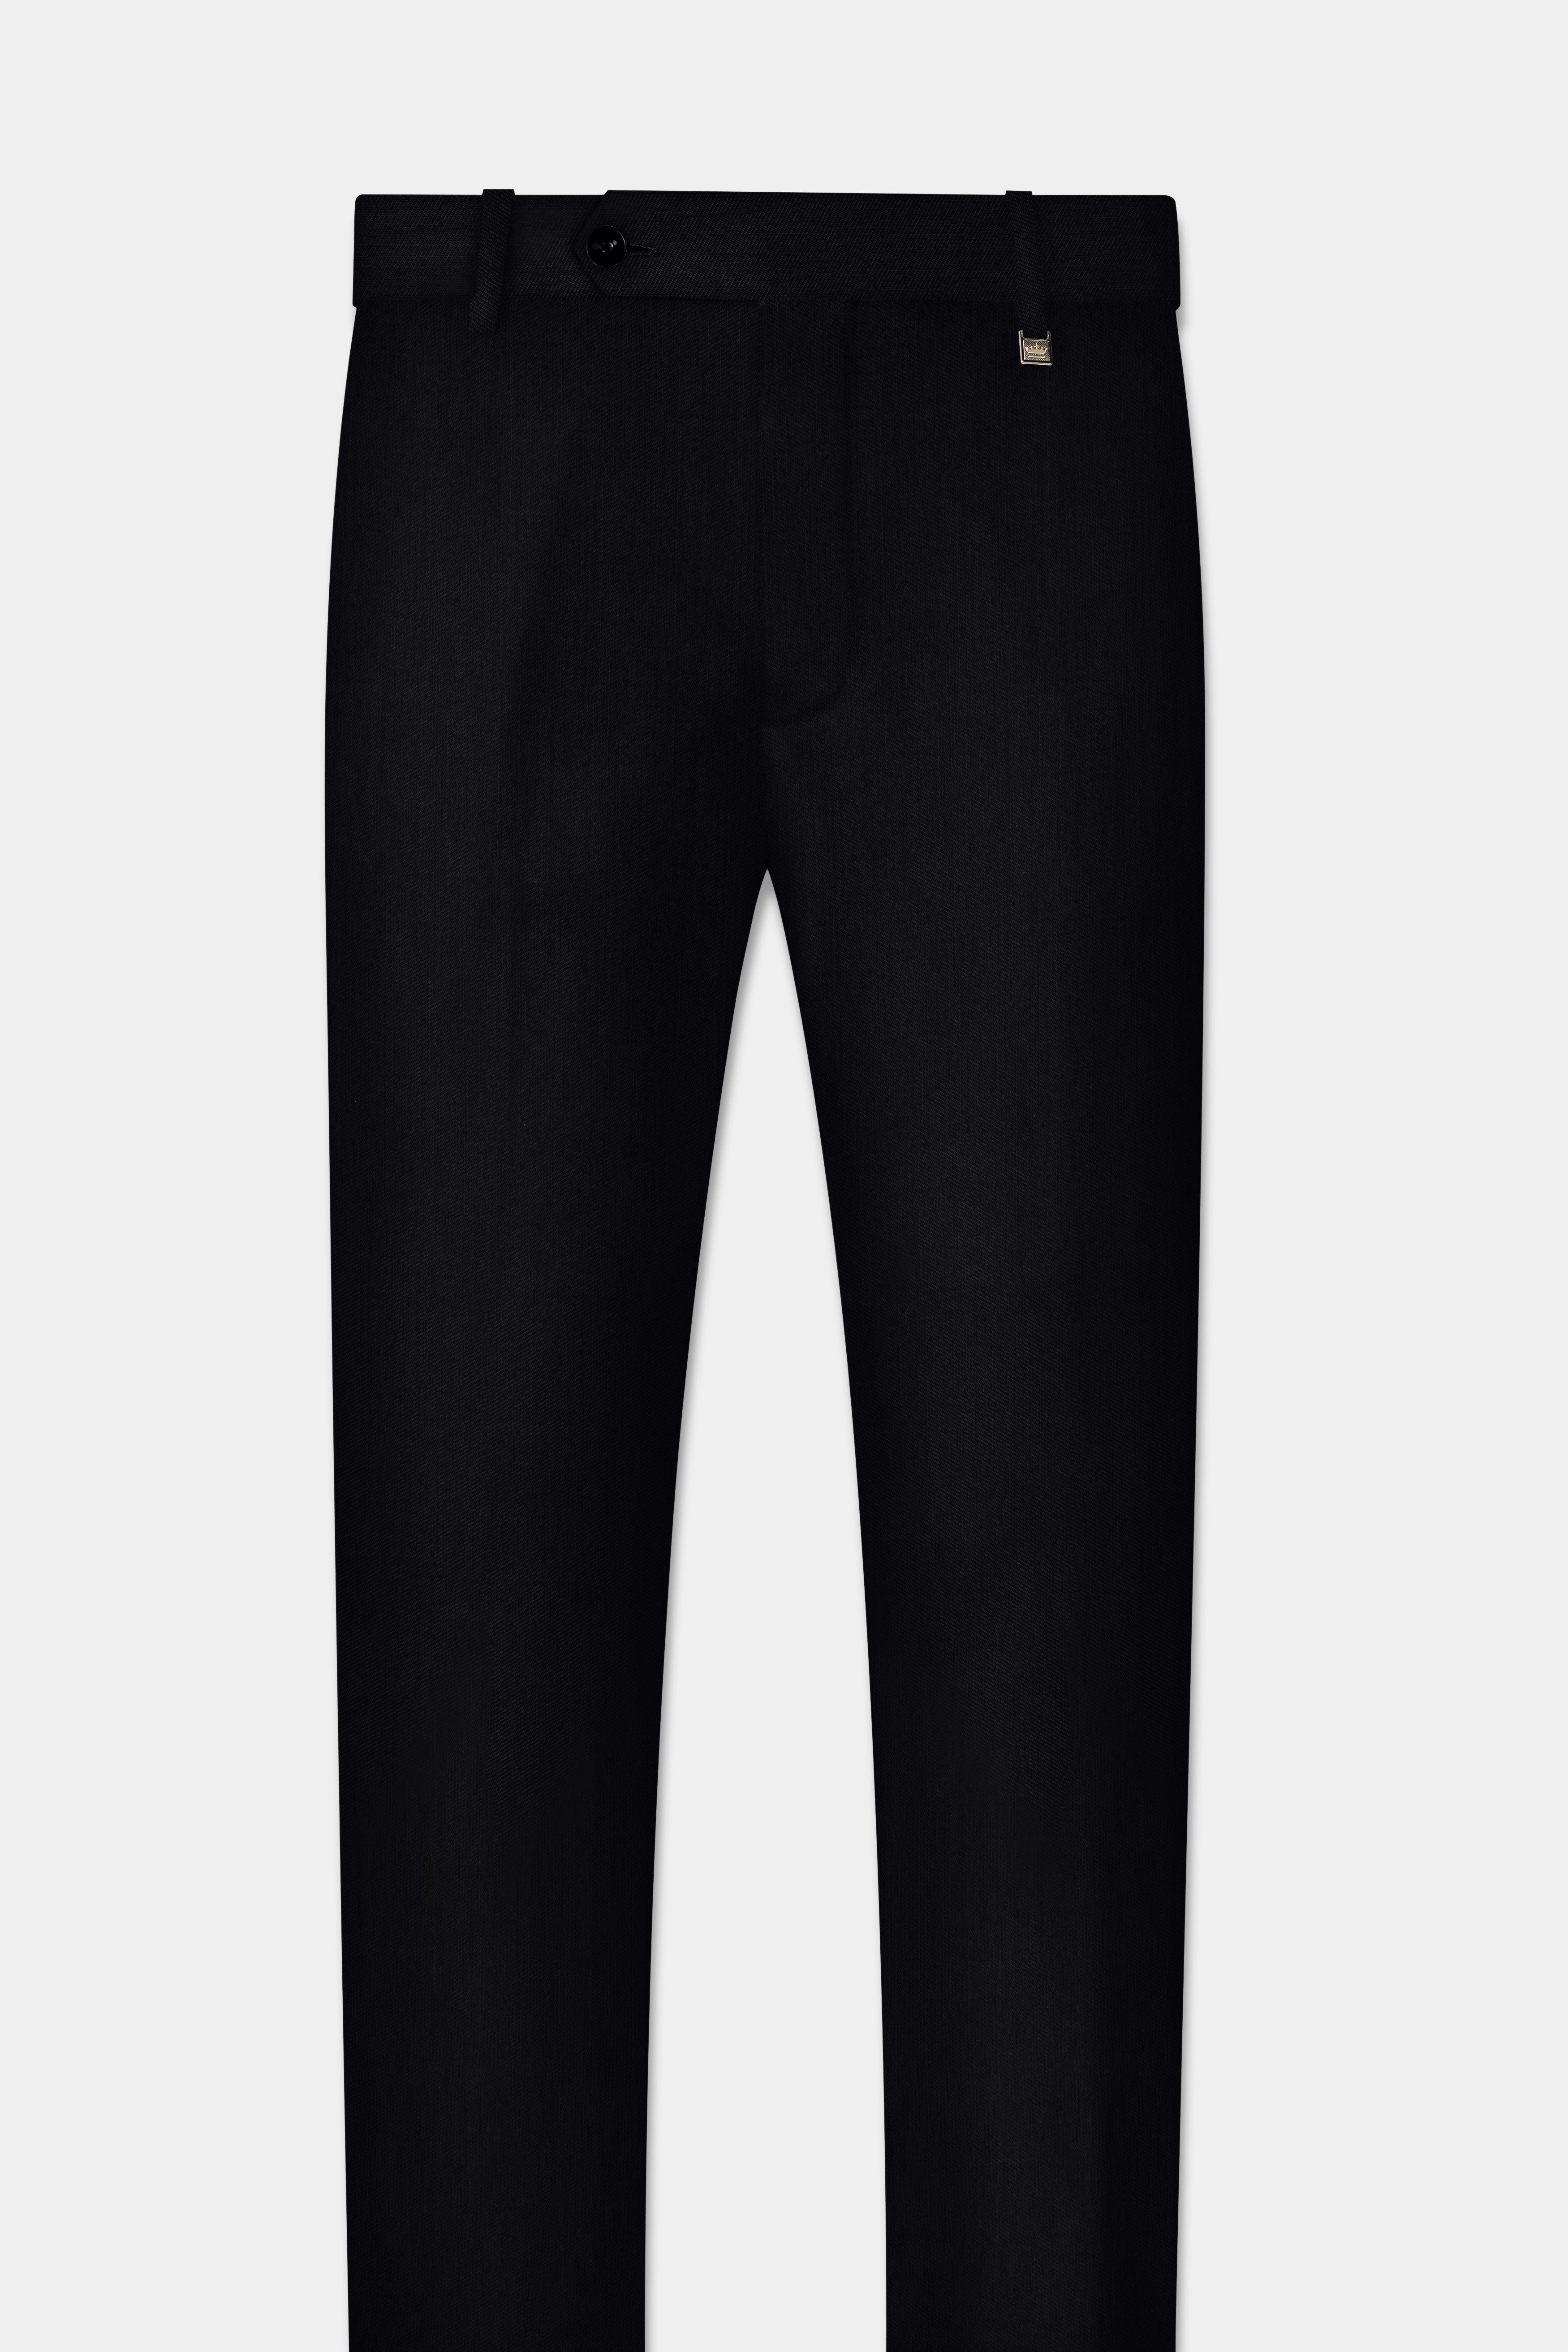 Jade Black Plain Solid Wool Blend Cross Placket Bandhgala Suit